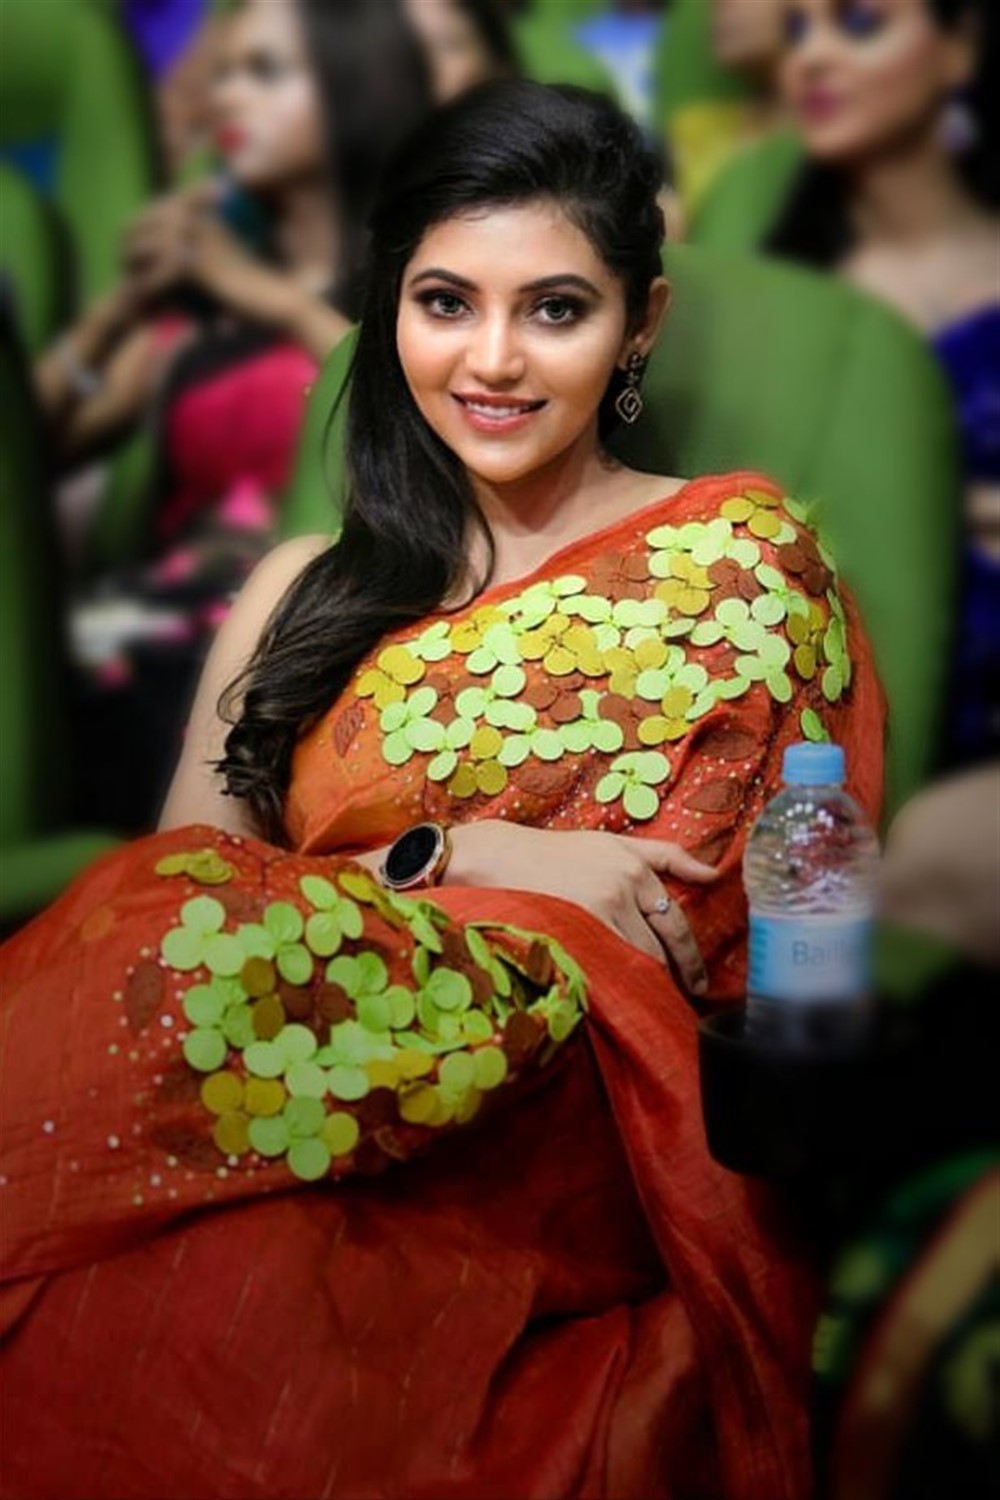 Actress Athulya Ravi New Photoshoot Images | Moviegalleri.net